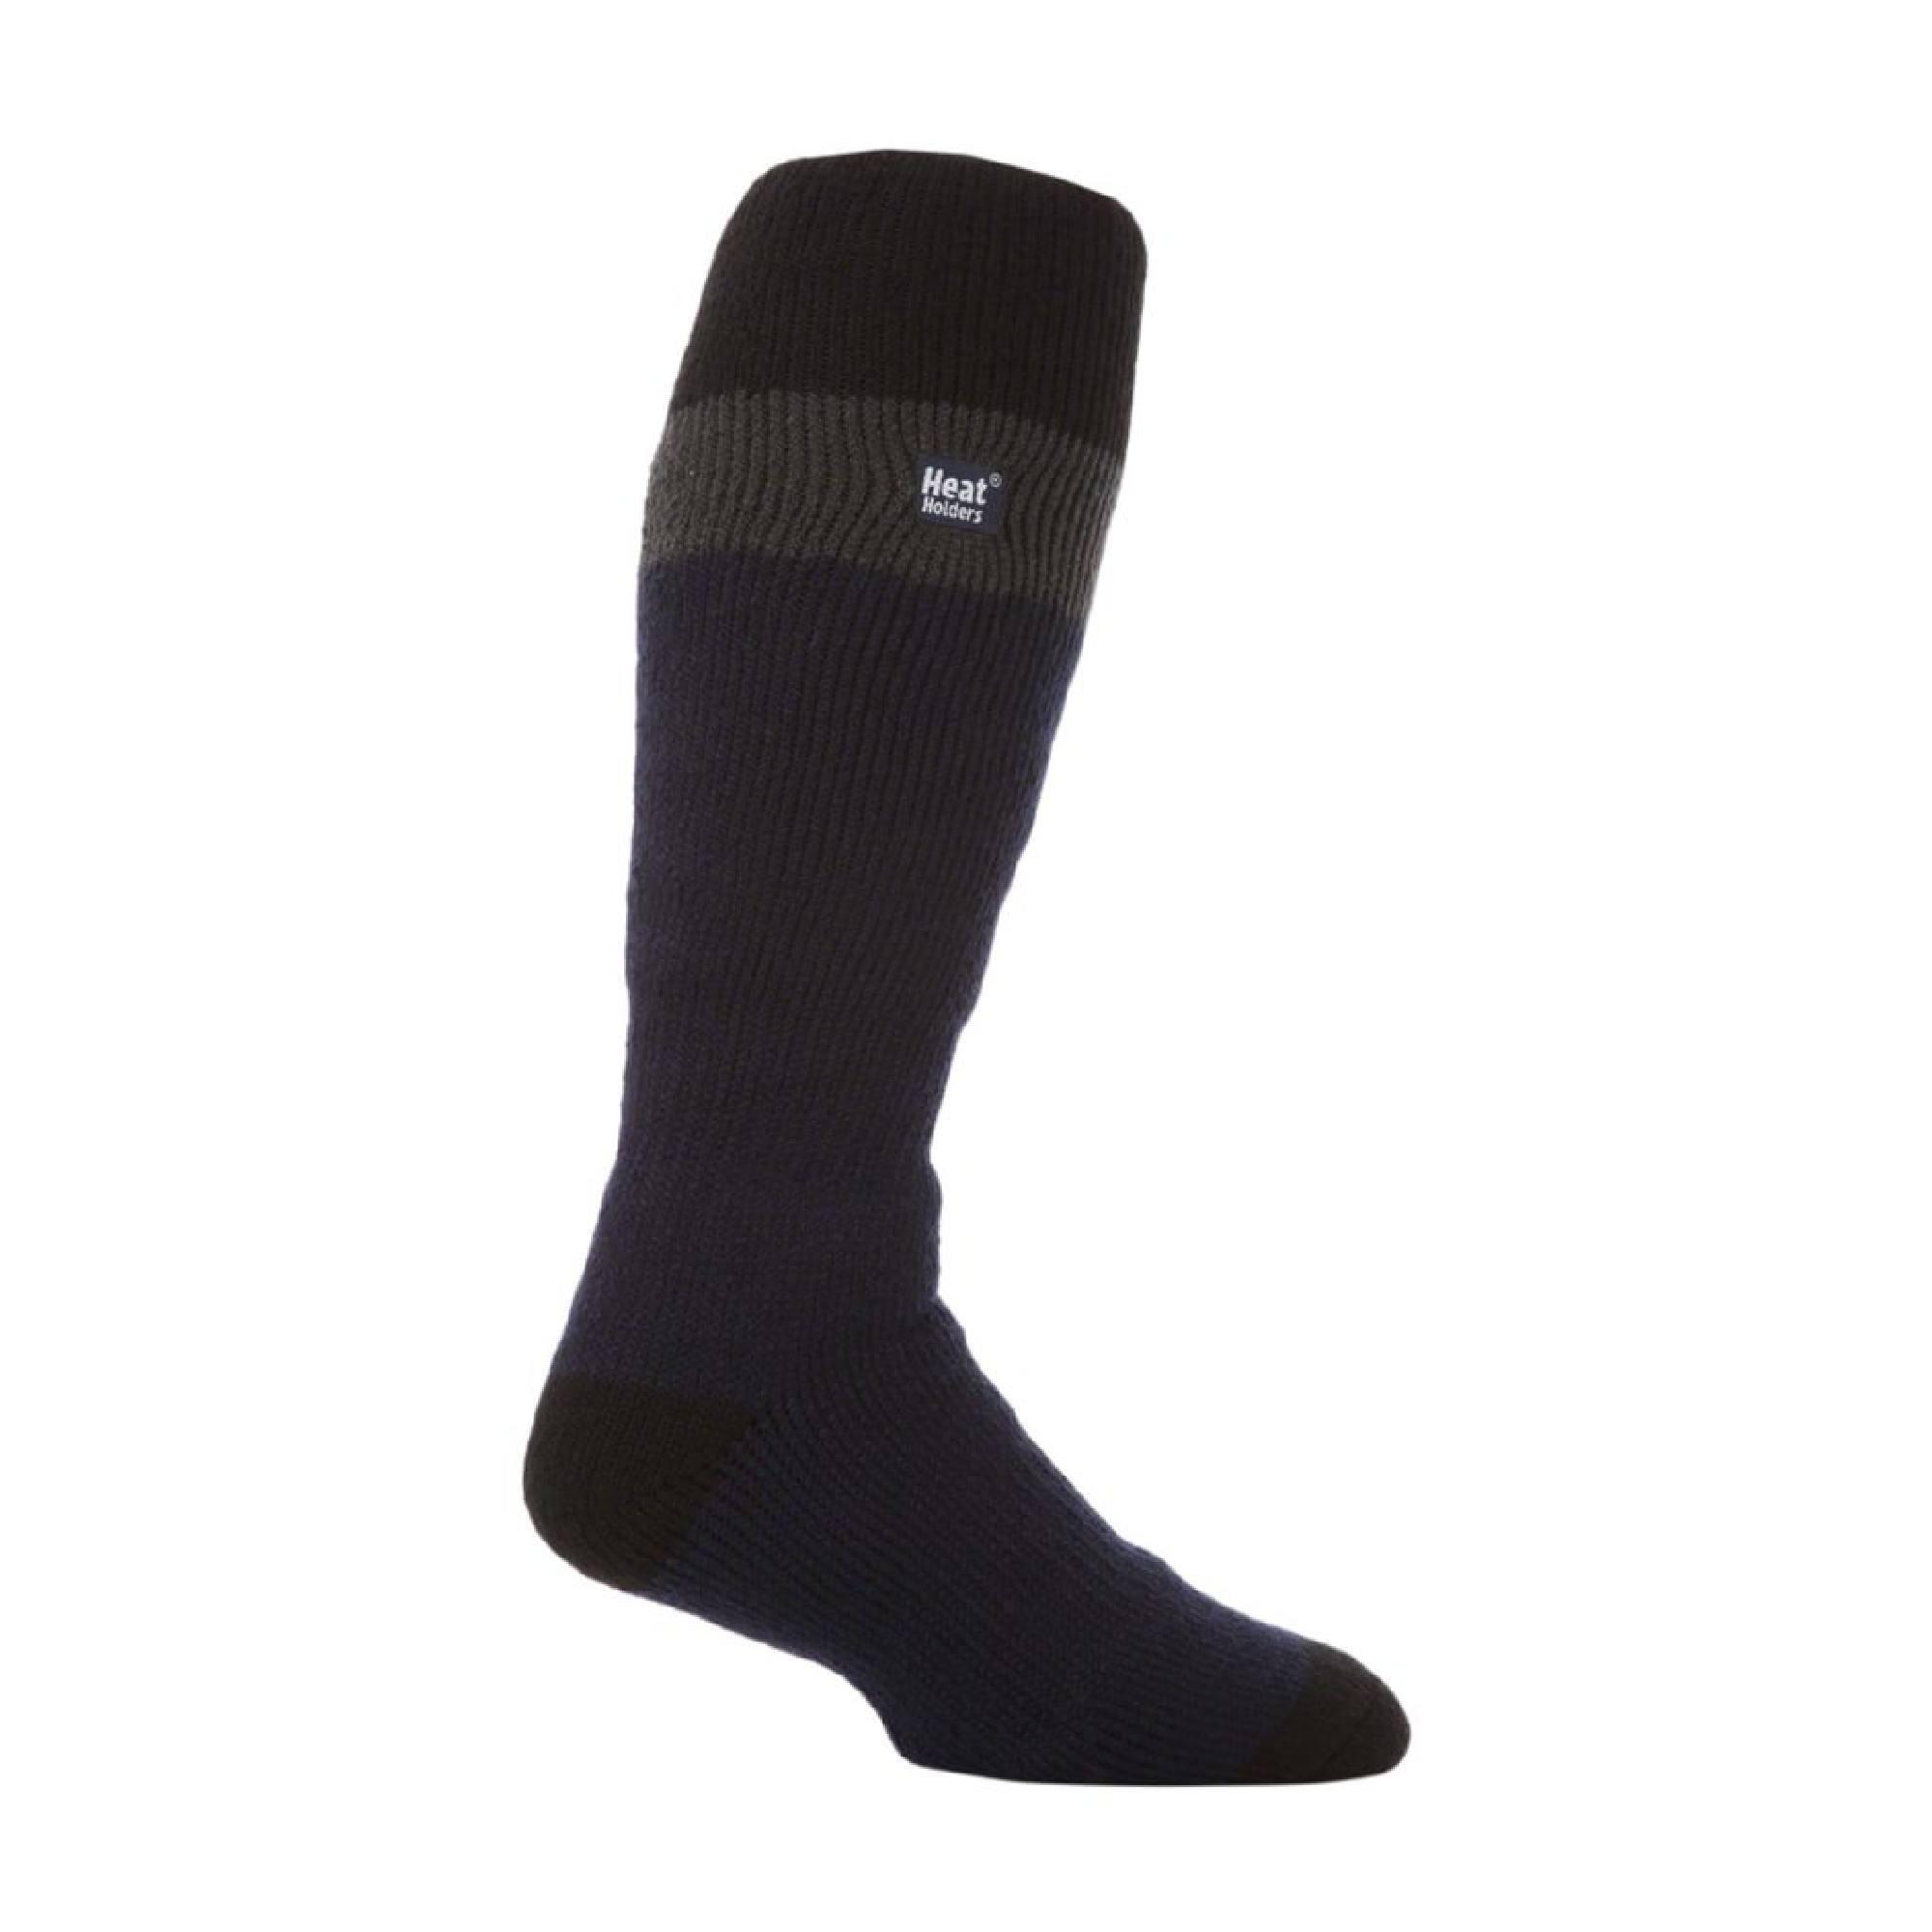 Mens Thermal Extra Long 2.3 TOG Winter Knee High Ski Socks 1/4